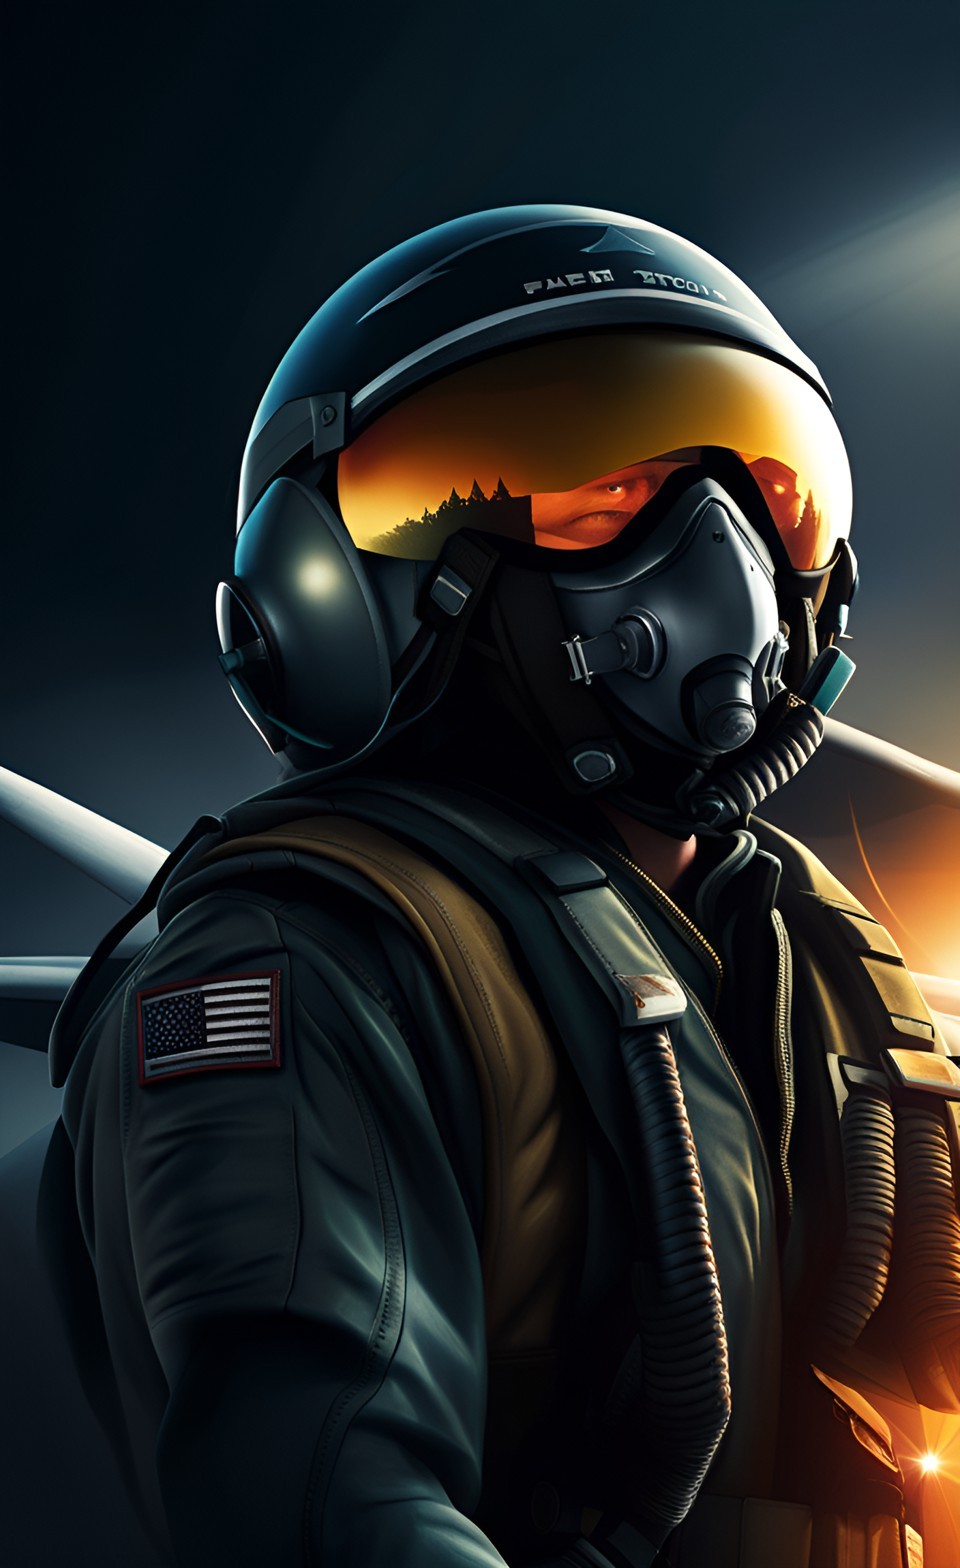 Fighter Jet Pilot iPhone Wallpaper 4K